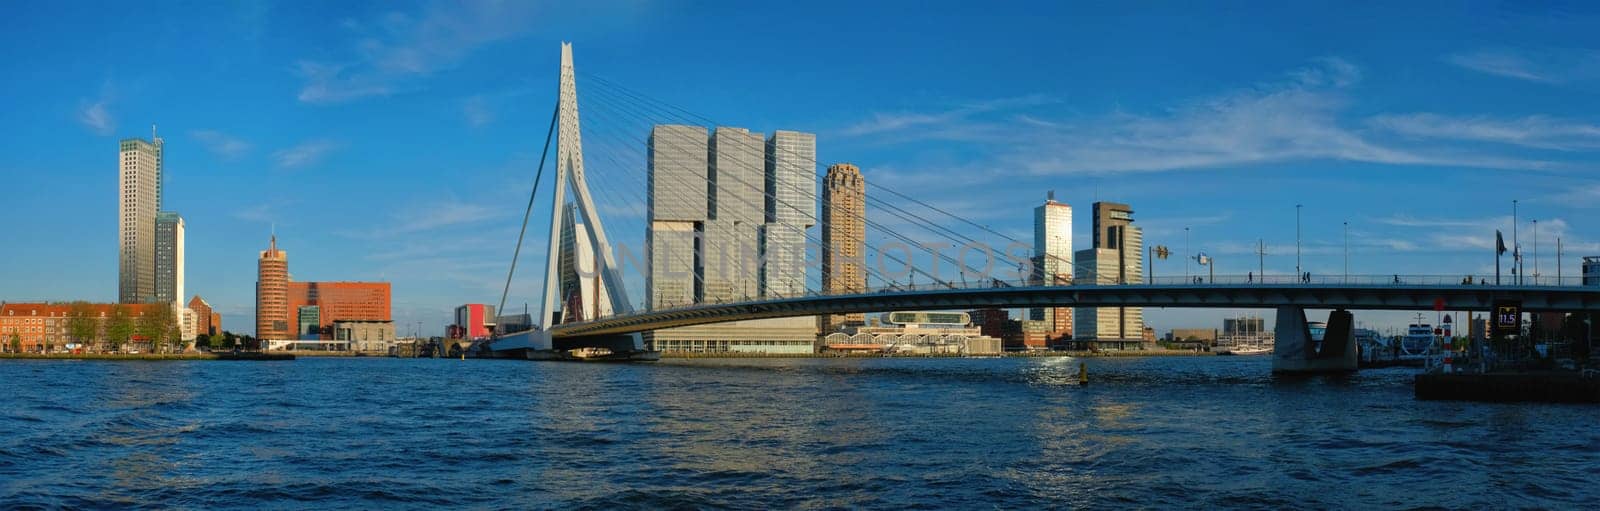 Rotterdam cityscape , Netherlands by dimol